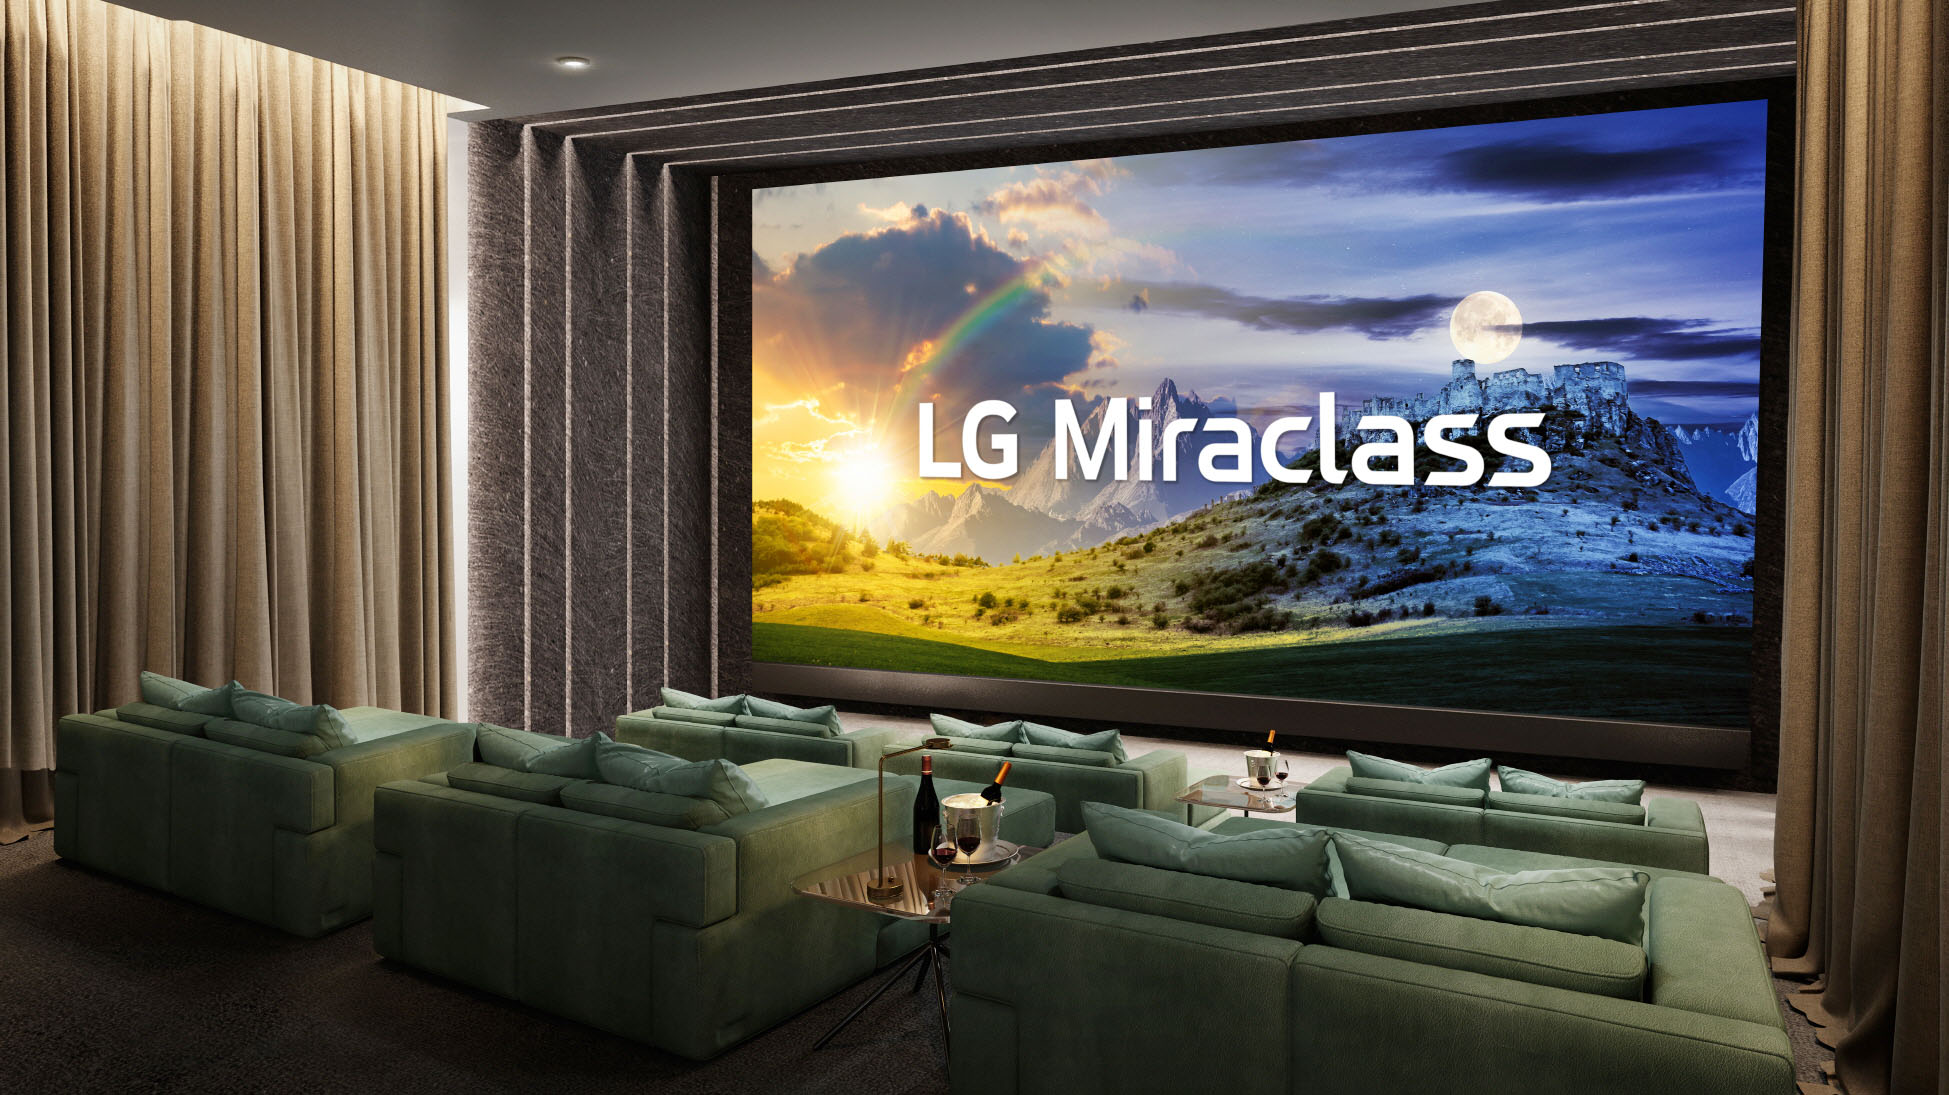 LG Miraclass display in a premium cinema